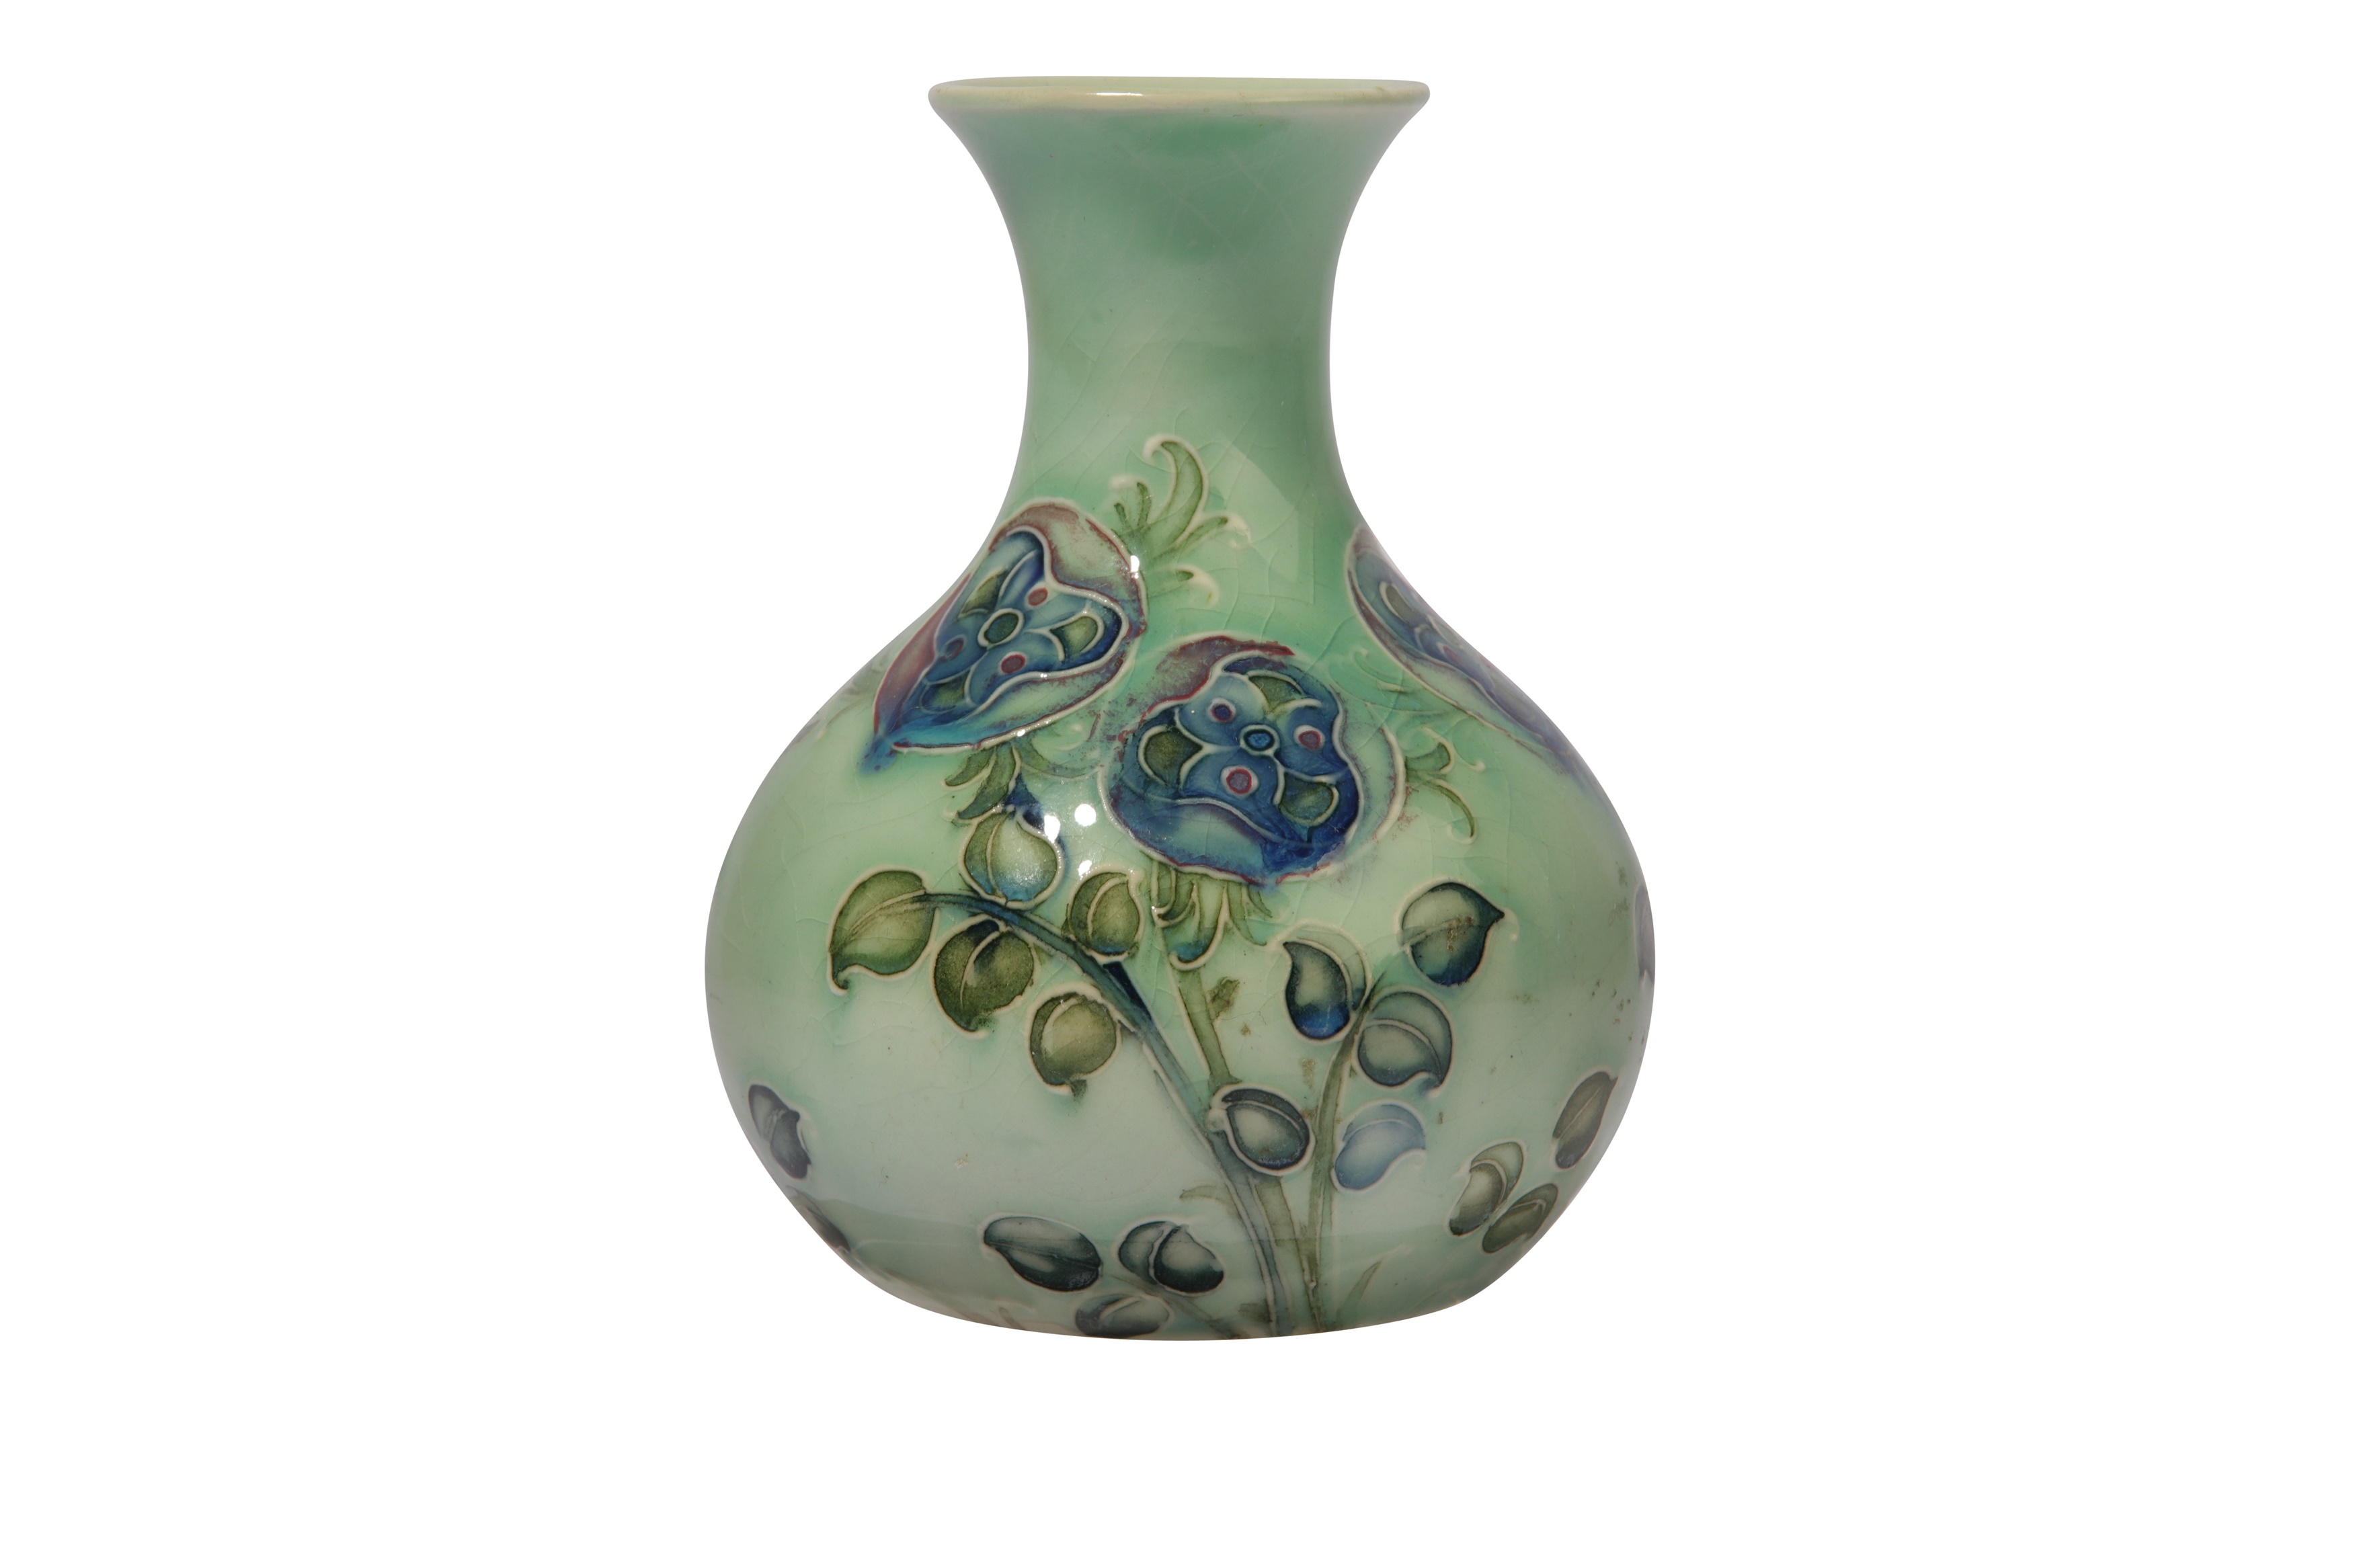 WILLIAM MOORCROFT FOR LIBERTY & CO., a Tudor Rose miniature bottle vase